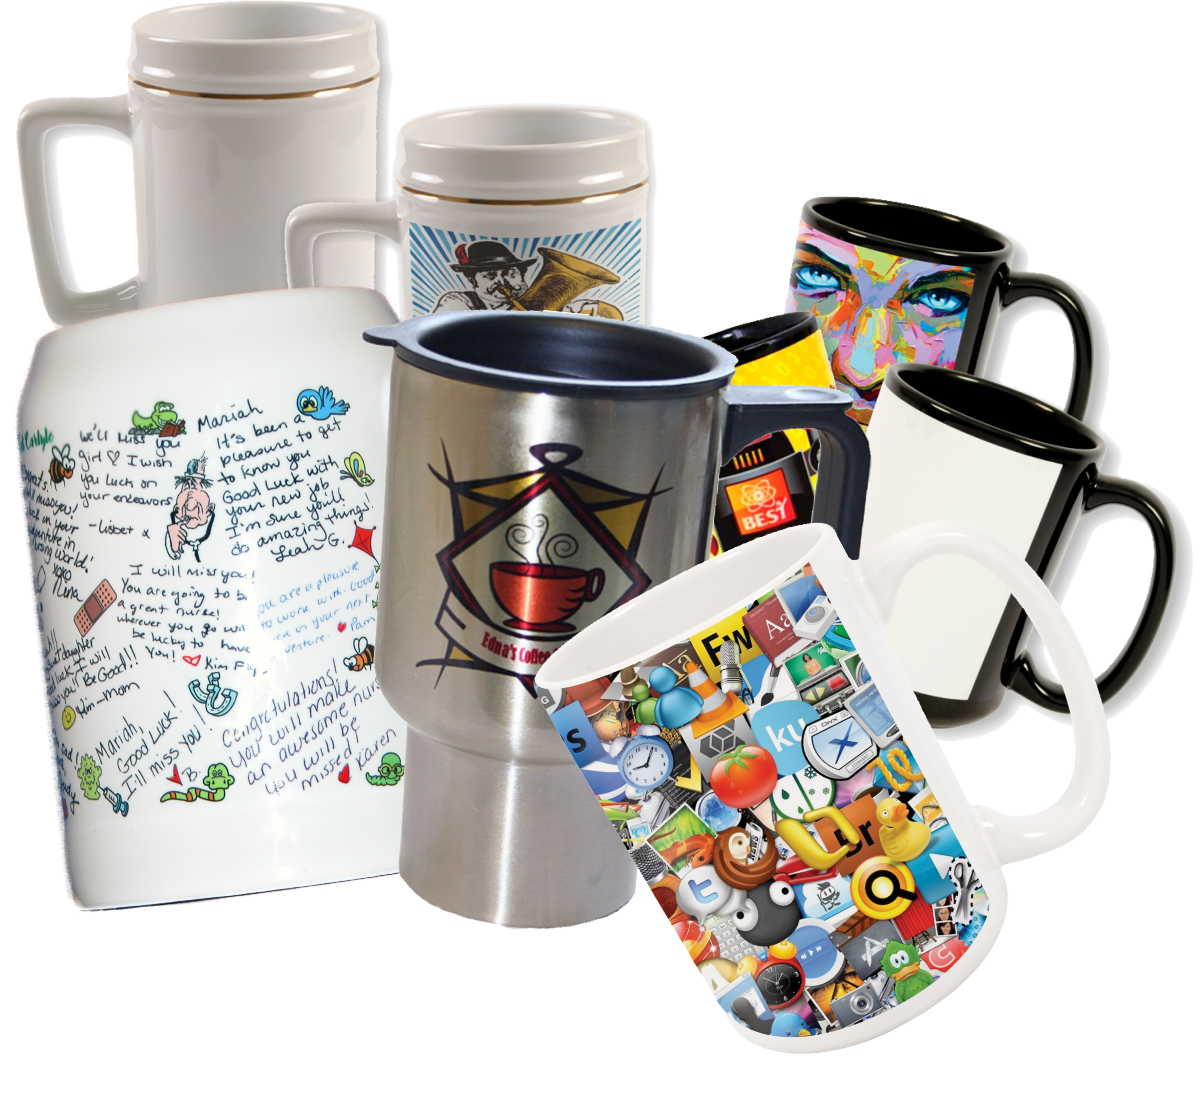 Group of personalized photo mugs